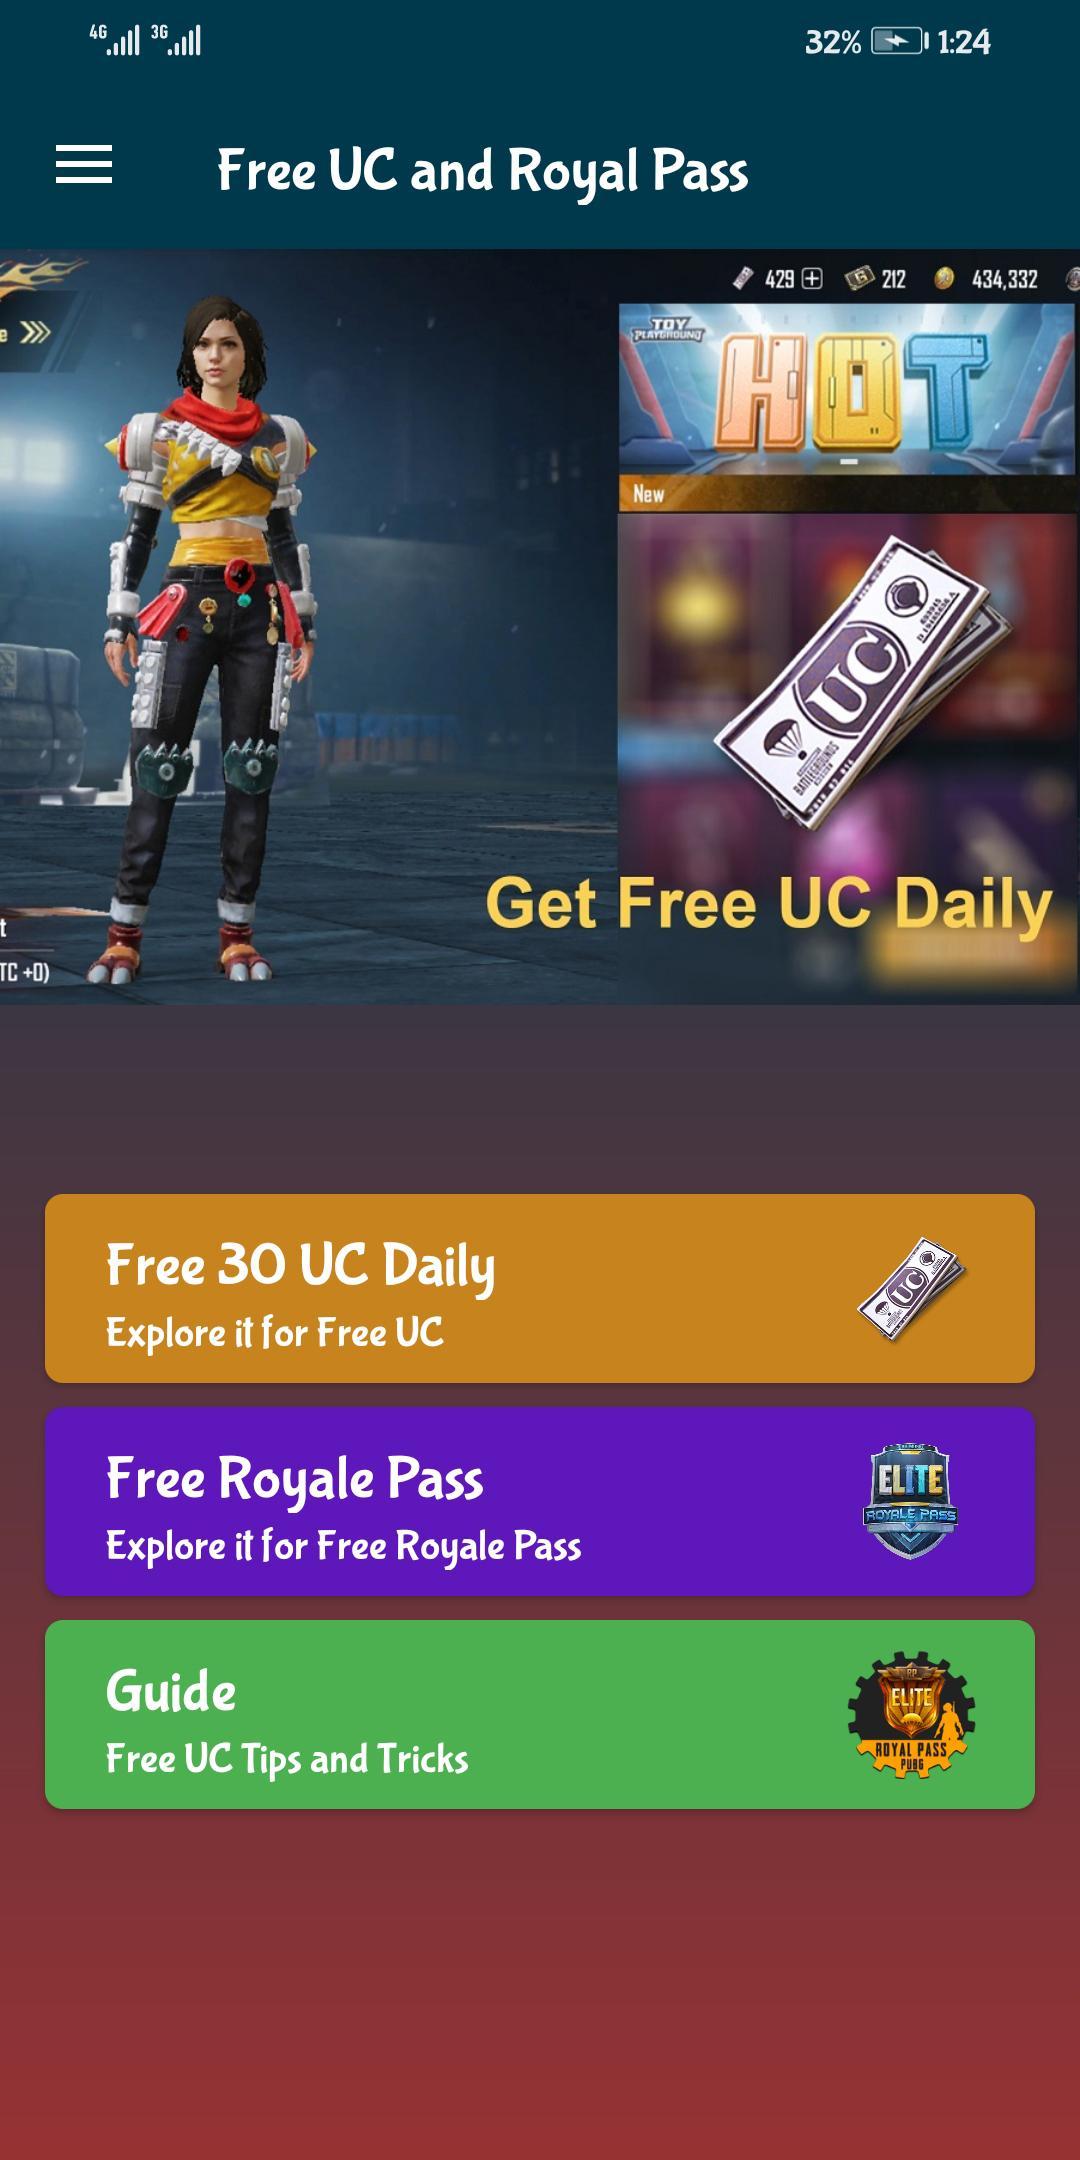 Free UC and Royal Pass